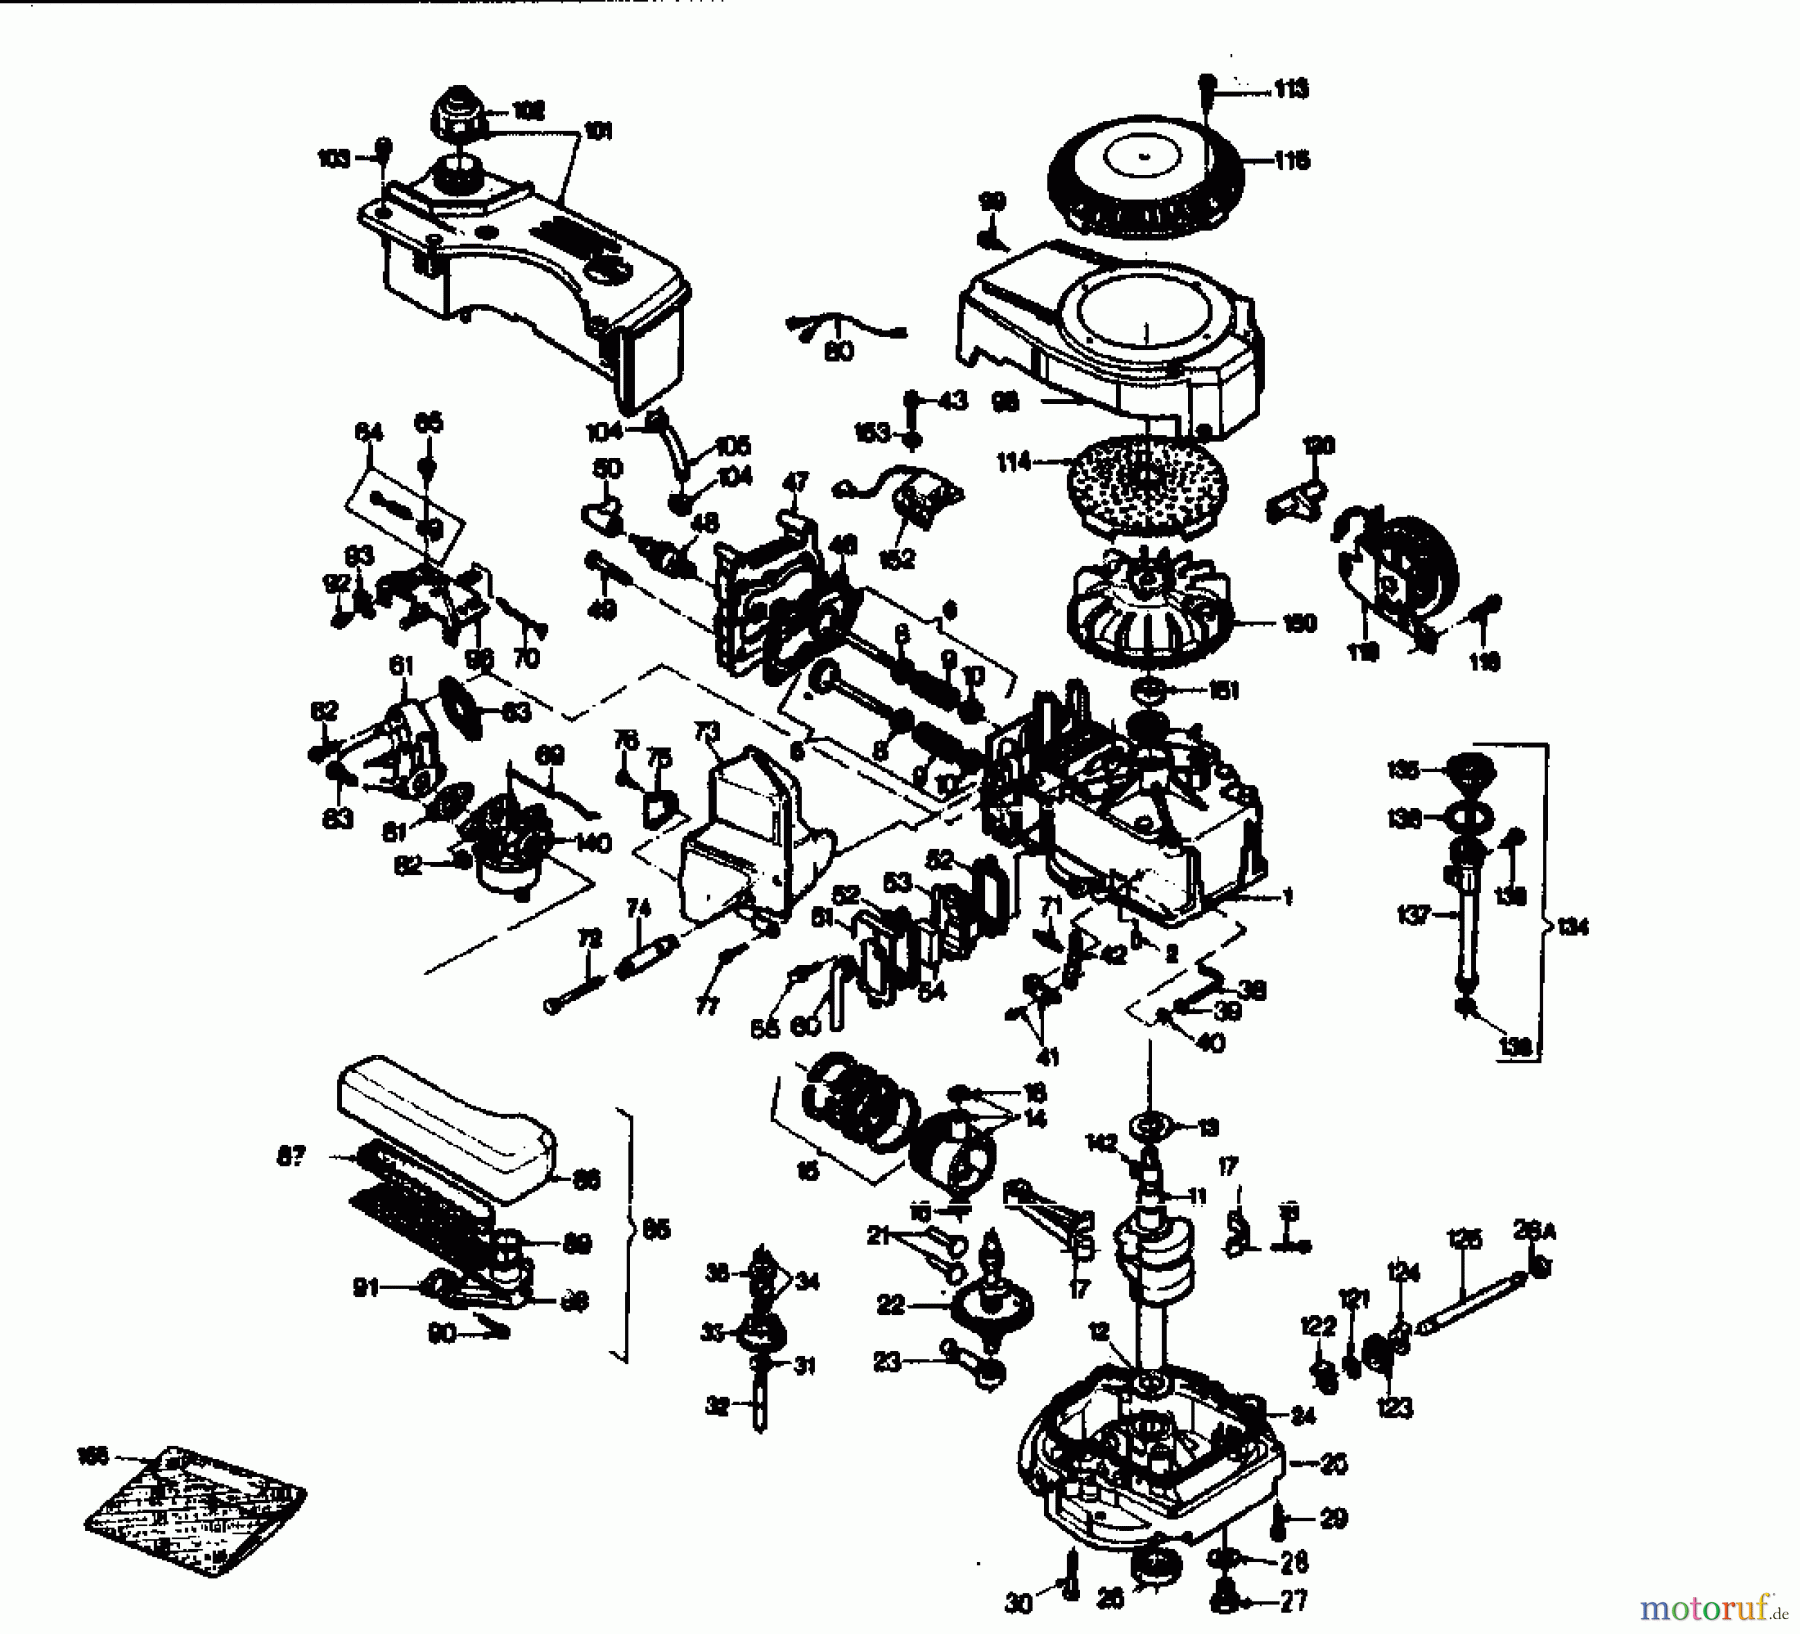  Gutbrod Motormäher mit Antrieb HB 46 R 02877.02  (1989) Kurbelgehäuse, Zylinder